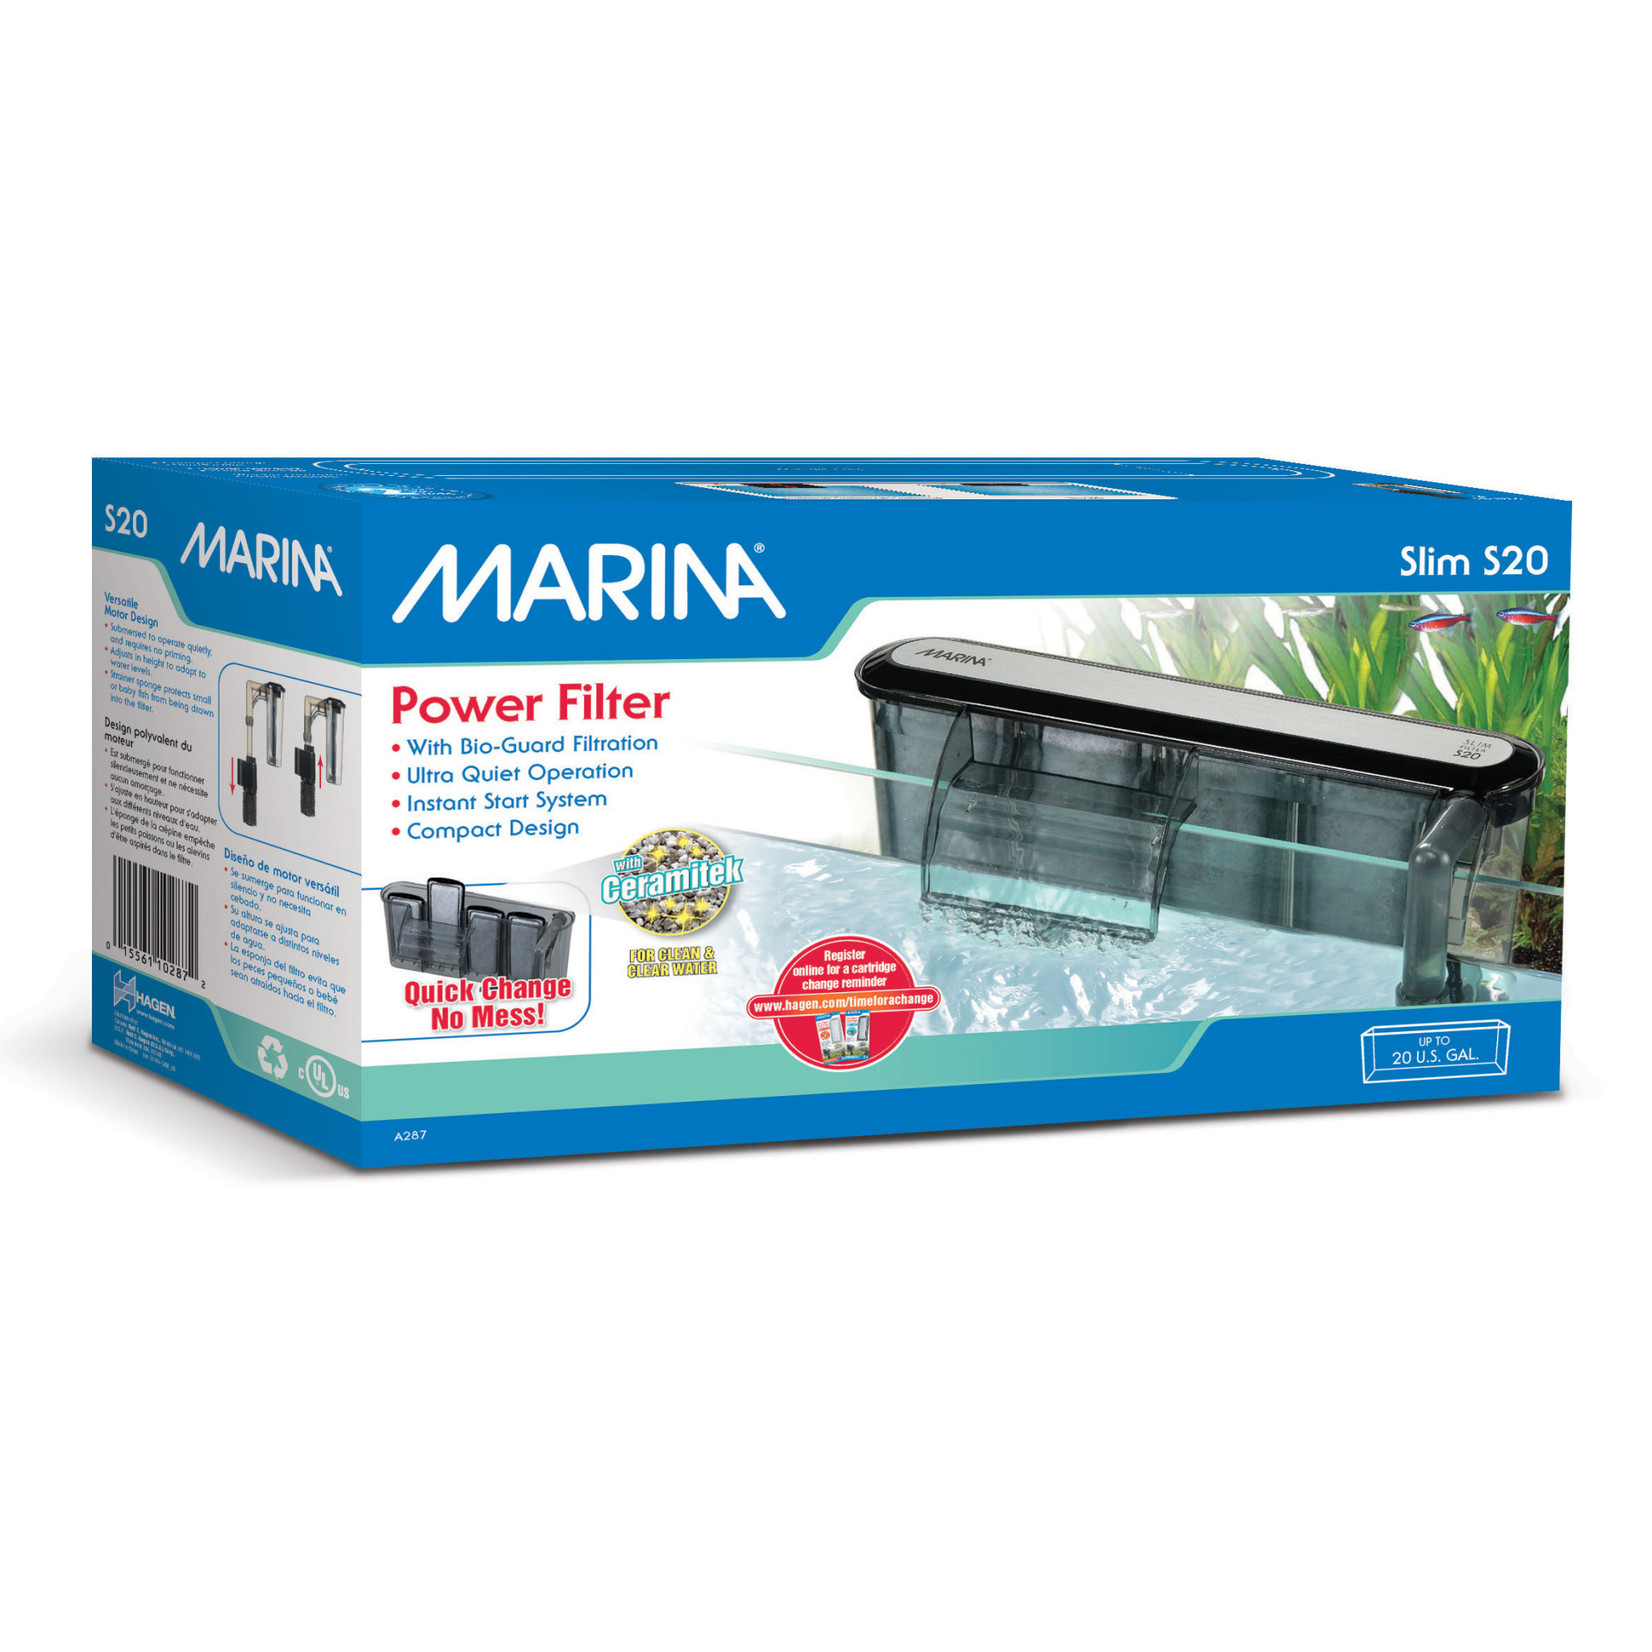 MARINA Marina Slim Filter S20 for Aquariums up to 76L (20 US Gal)